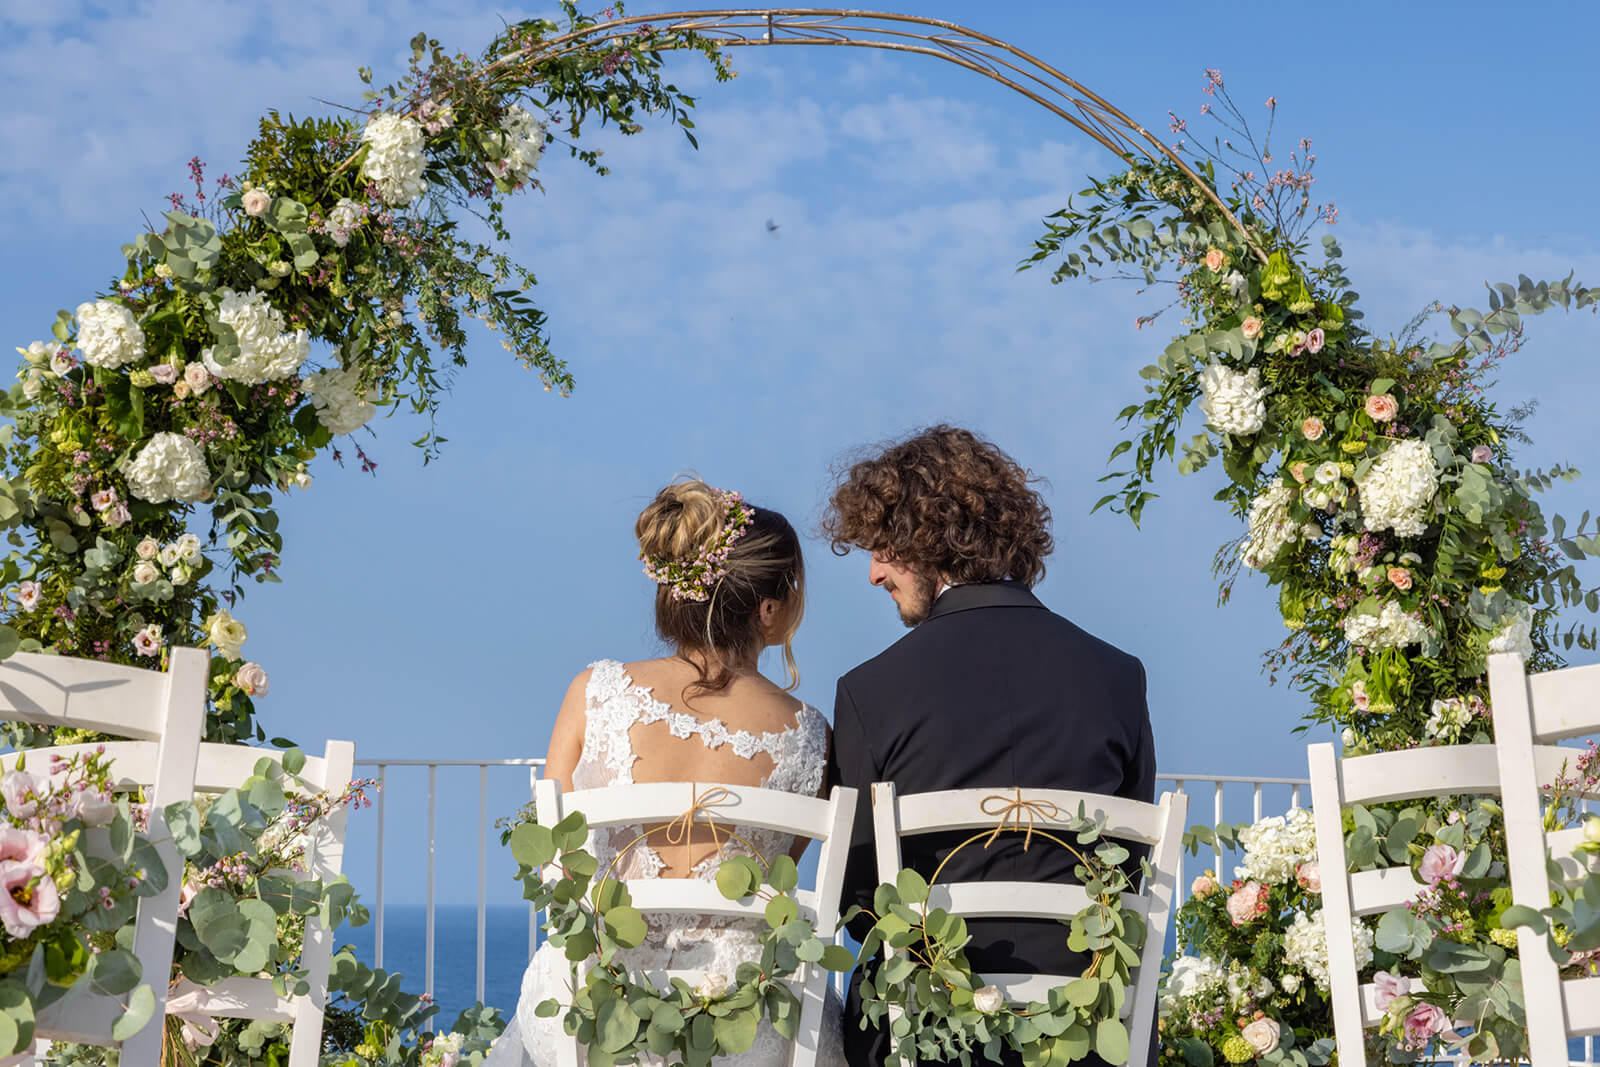 Wedding Archway of Flowers